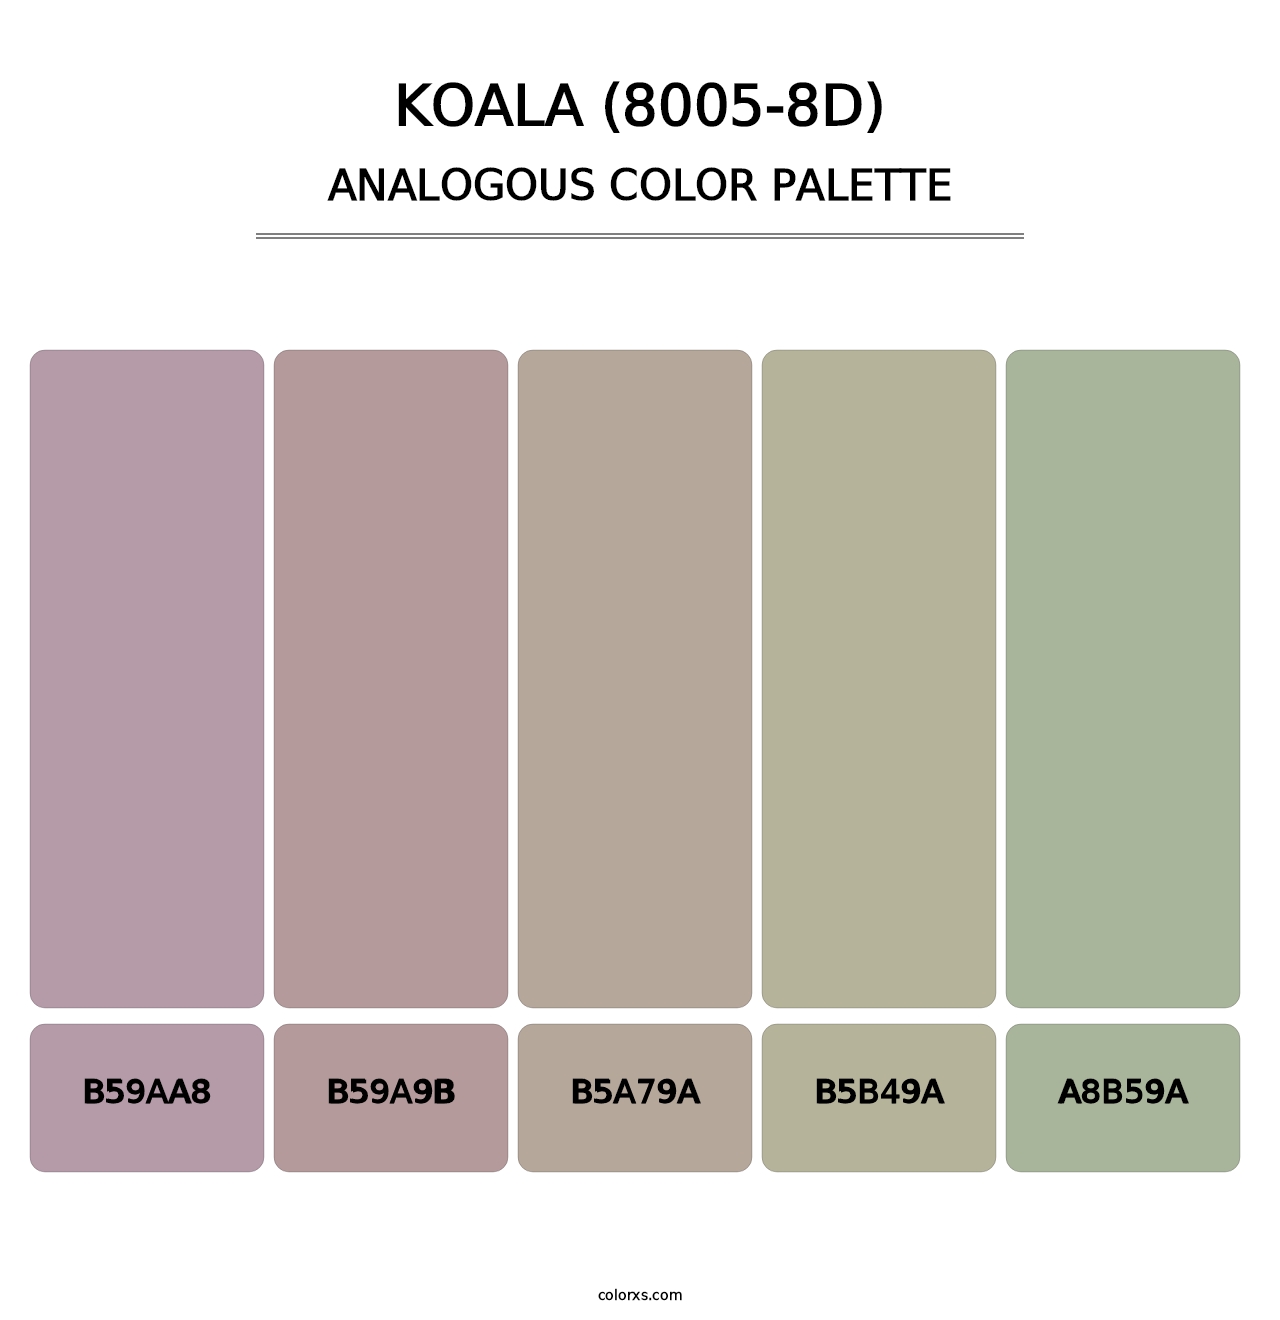 Koala (8005-8D) - Analogous Color Palette